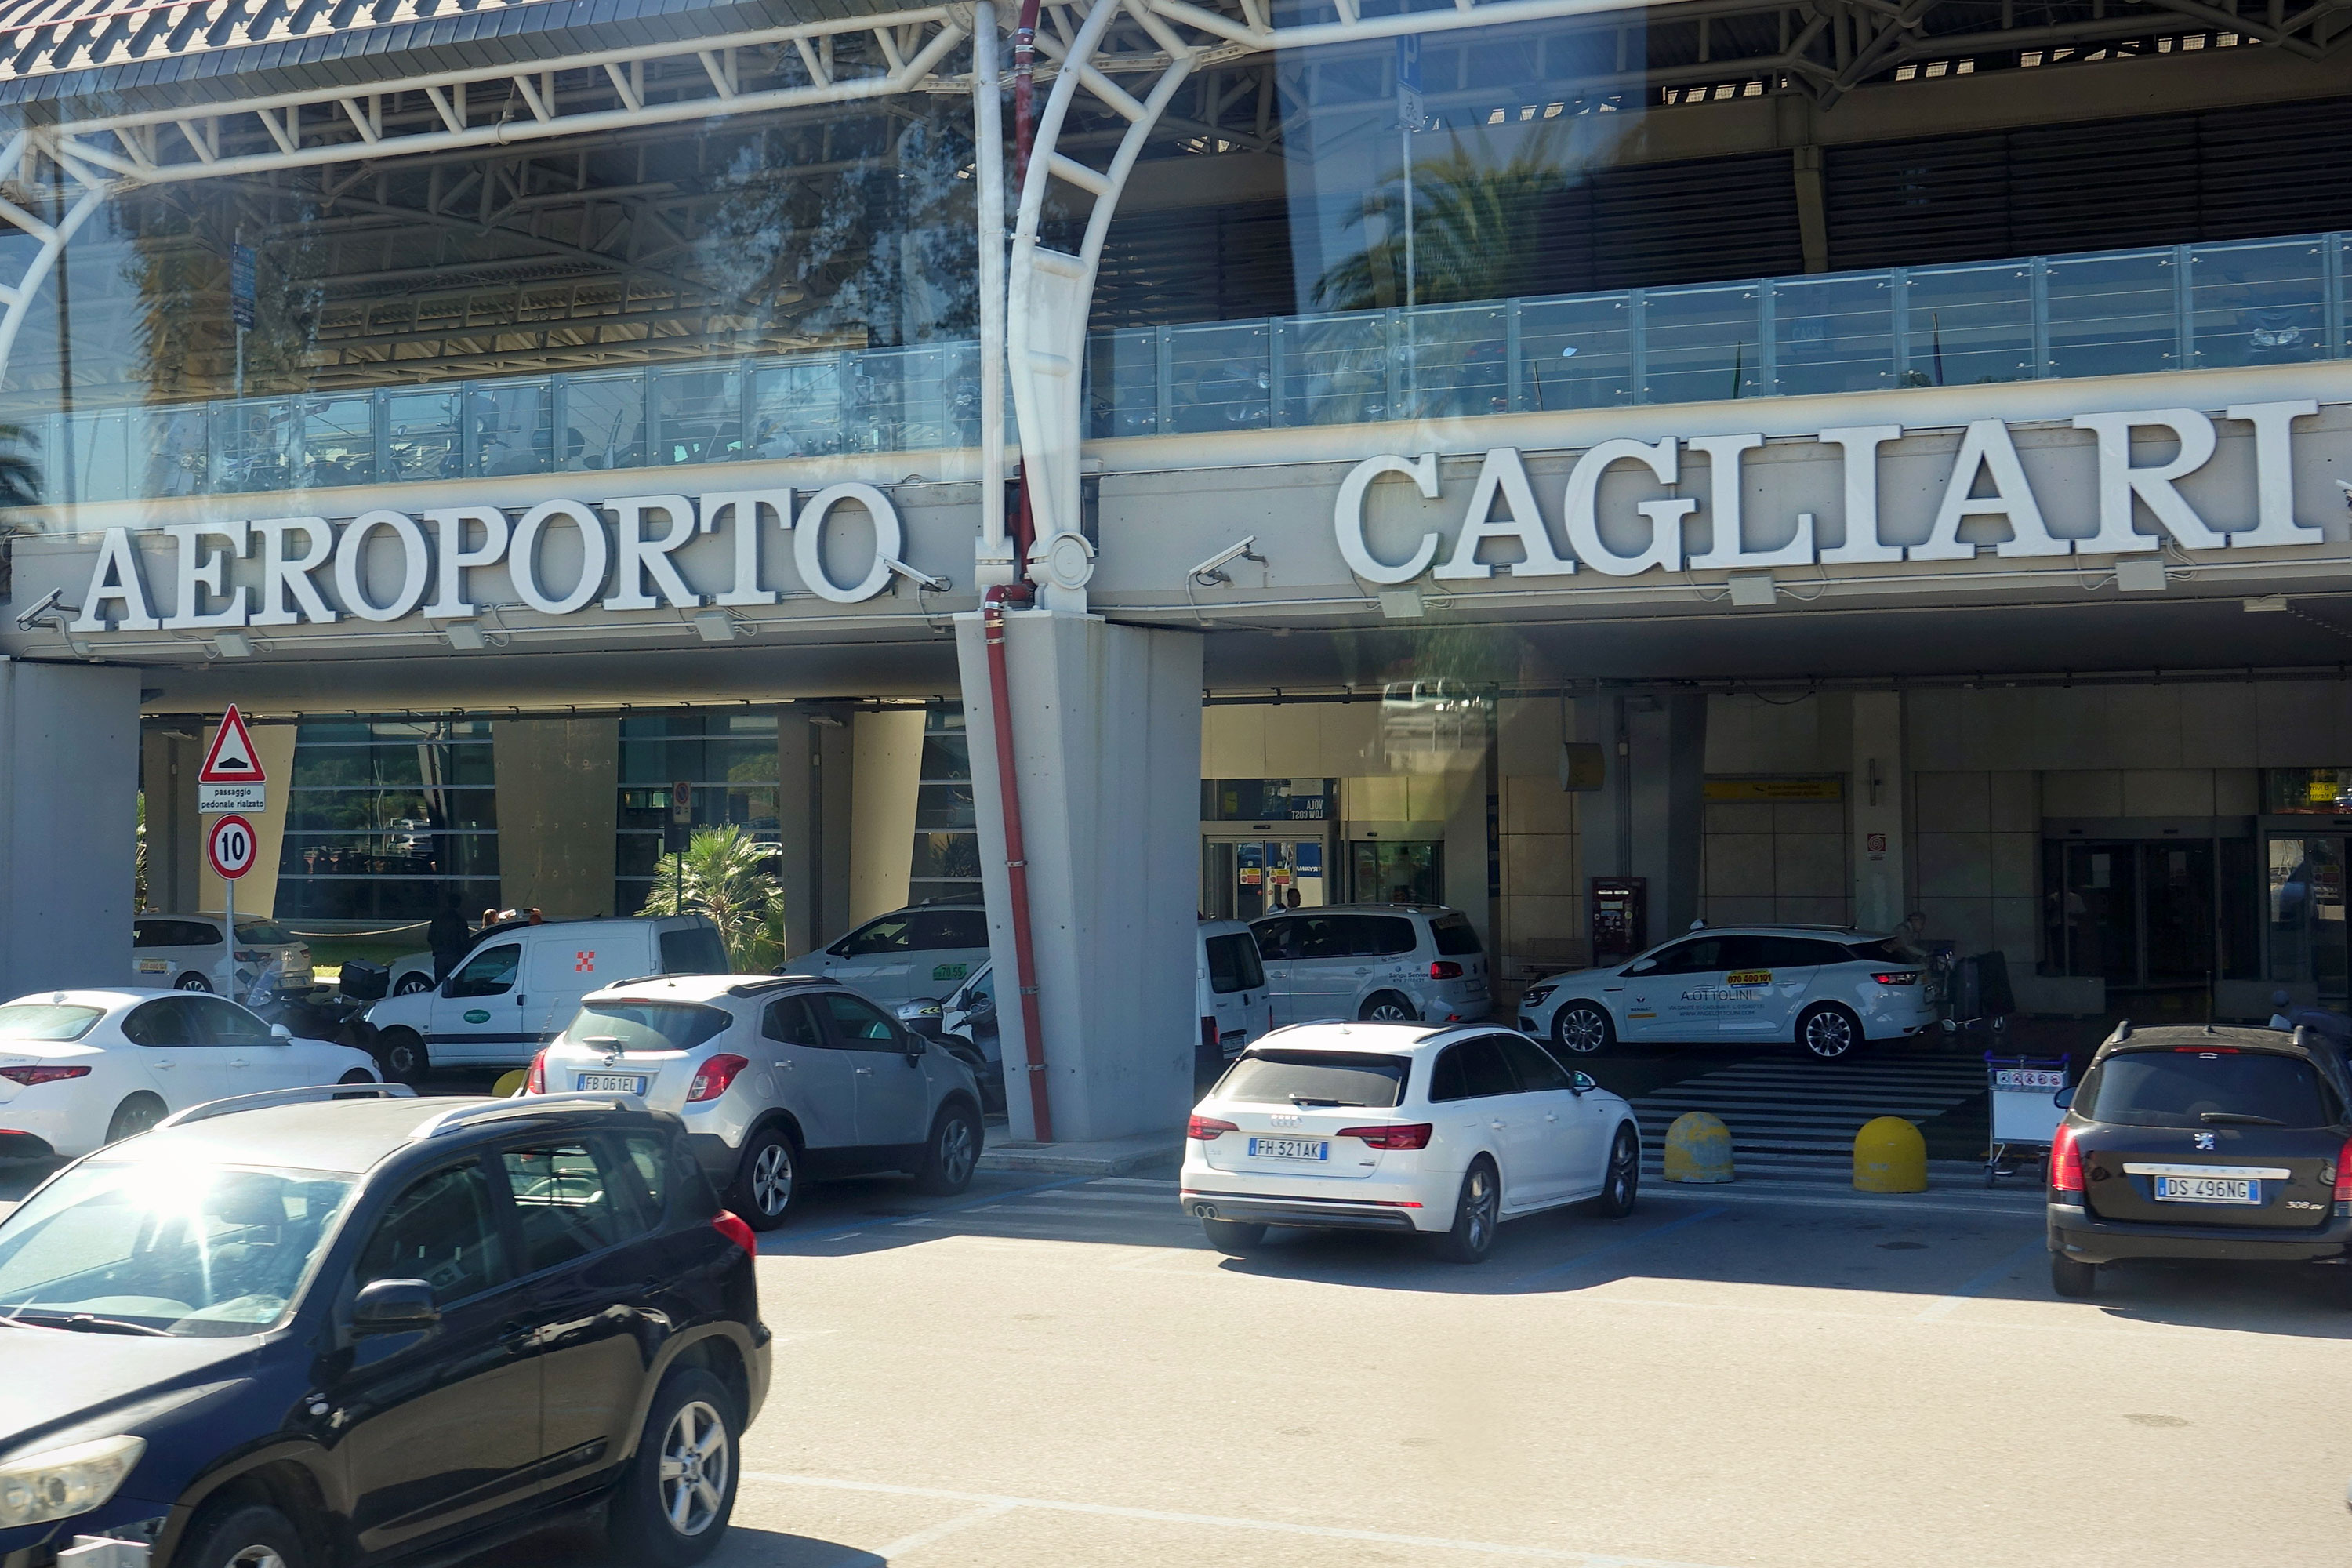 Cagliari airport in Sardinia